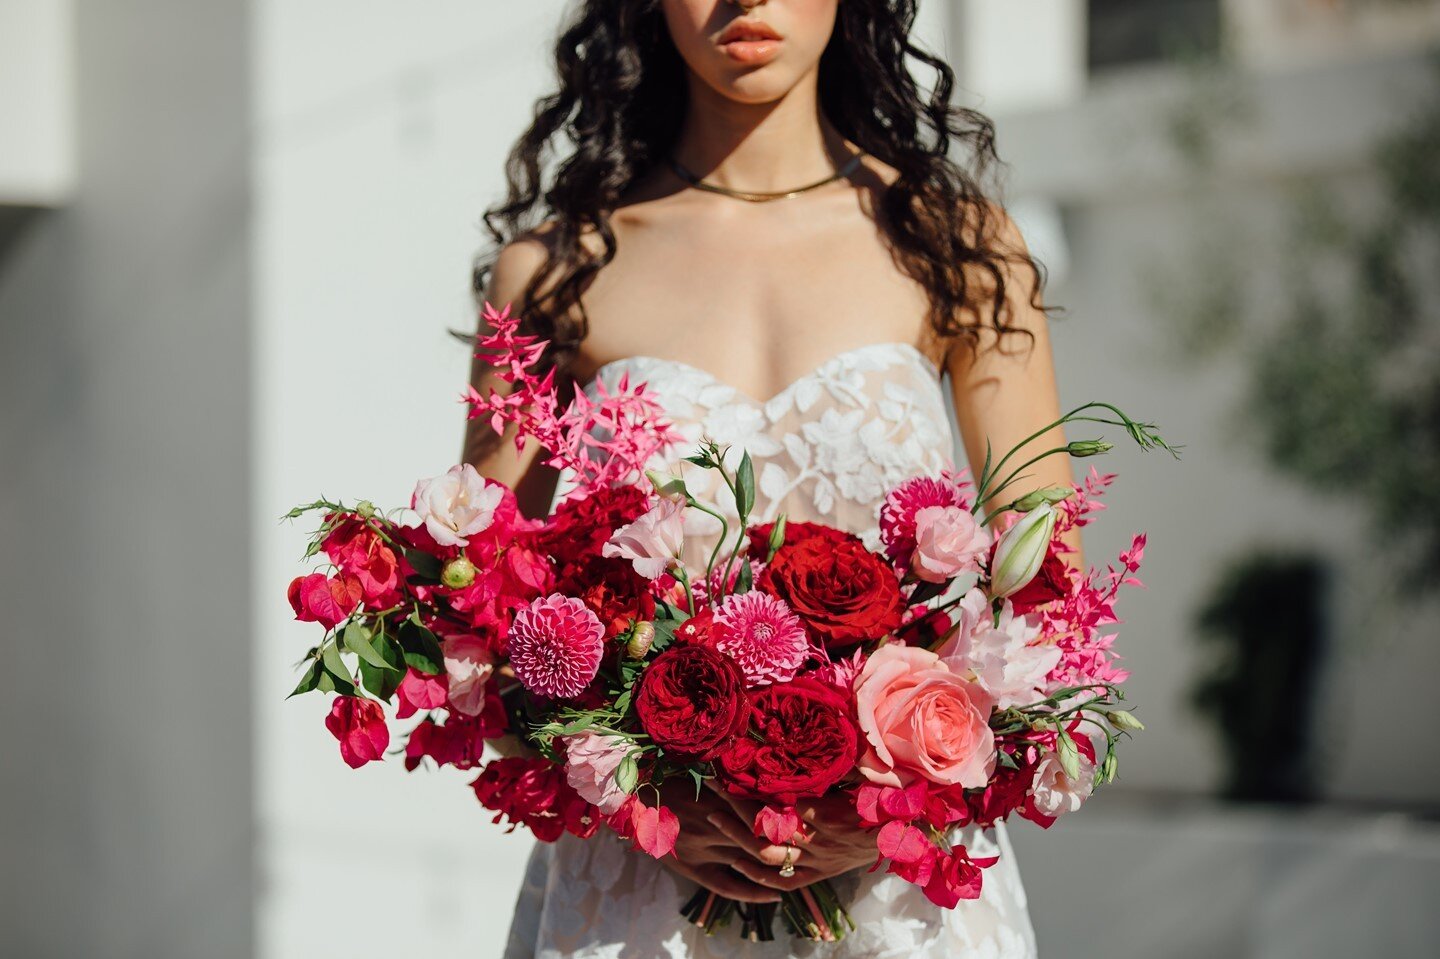 Sometimes the best accessory on your wedding day is that gorgeous a*&amp; bouquet 🤩 #statementbouquet⁠
⁠
Venue &ndash; @blancourbanvenue ⁠
Producer/Design - @tildeathla⁠
Photographer/Design &ndash; @katherinebreewalkerphotography⁠
Makeup - @paulinef